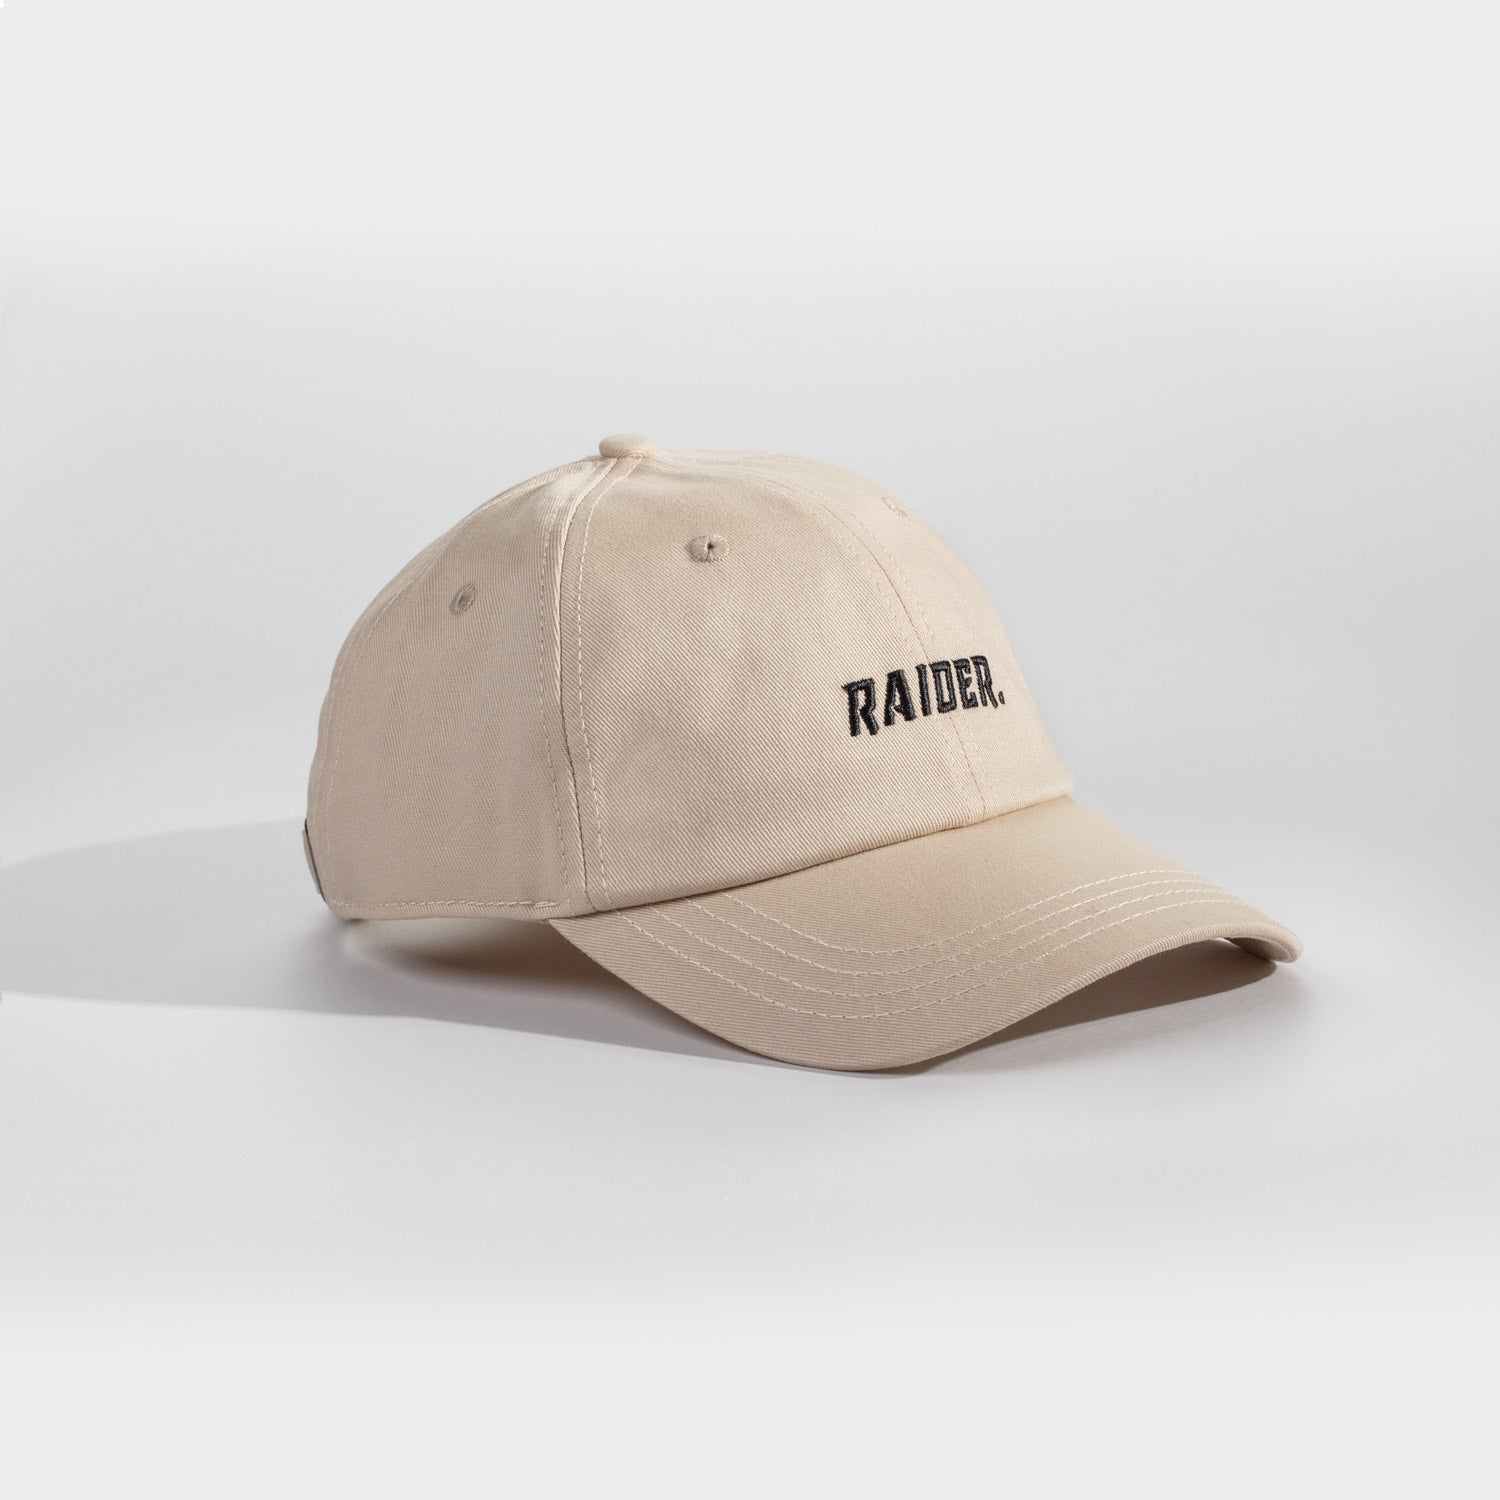 Raider Dad cap - Sandfarvet/sort